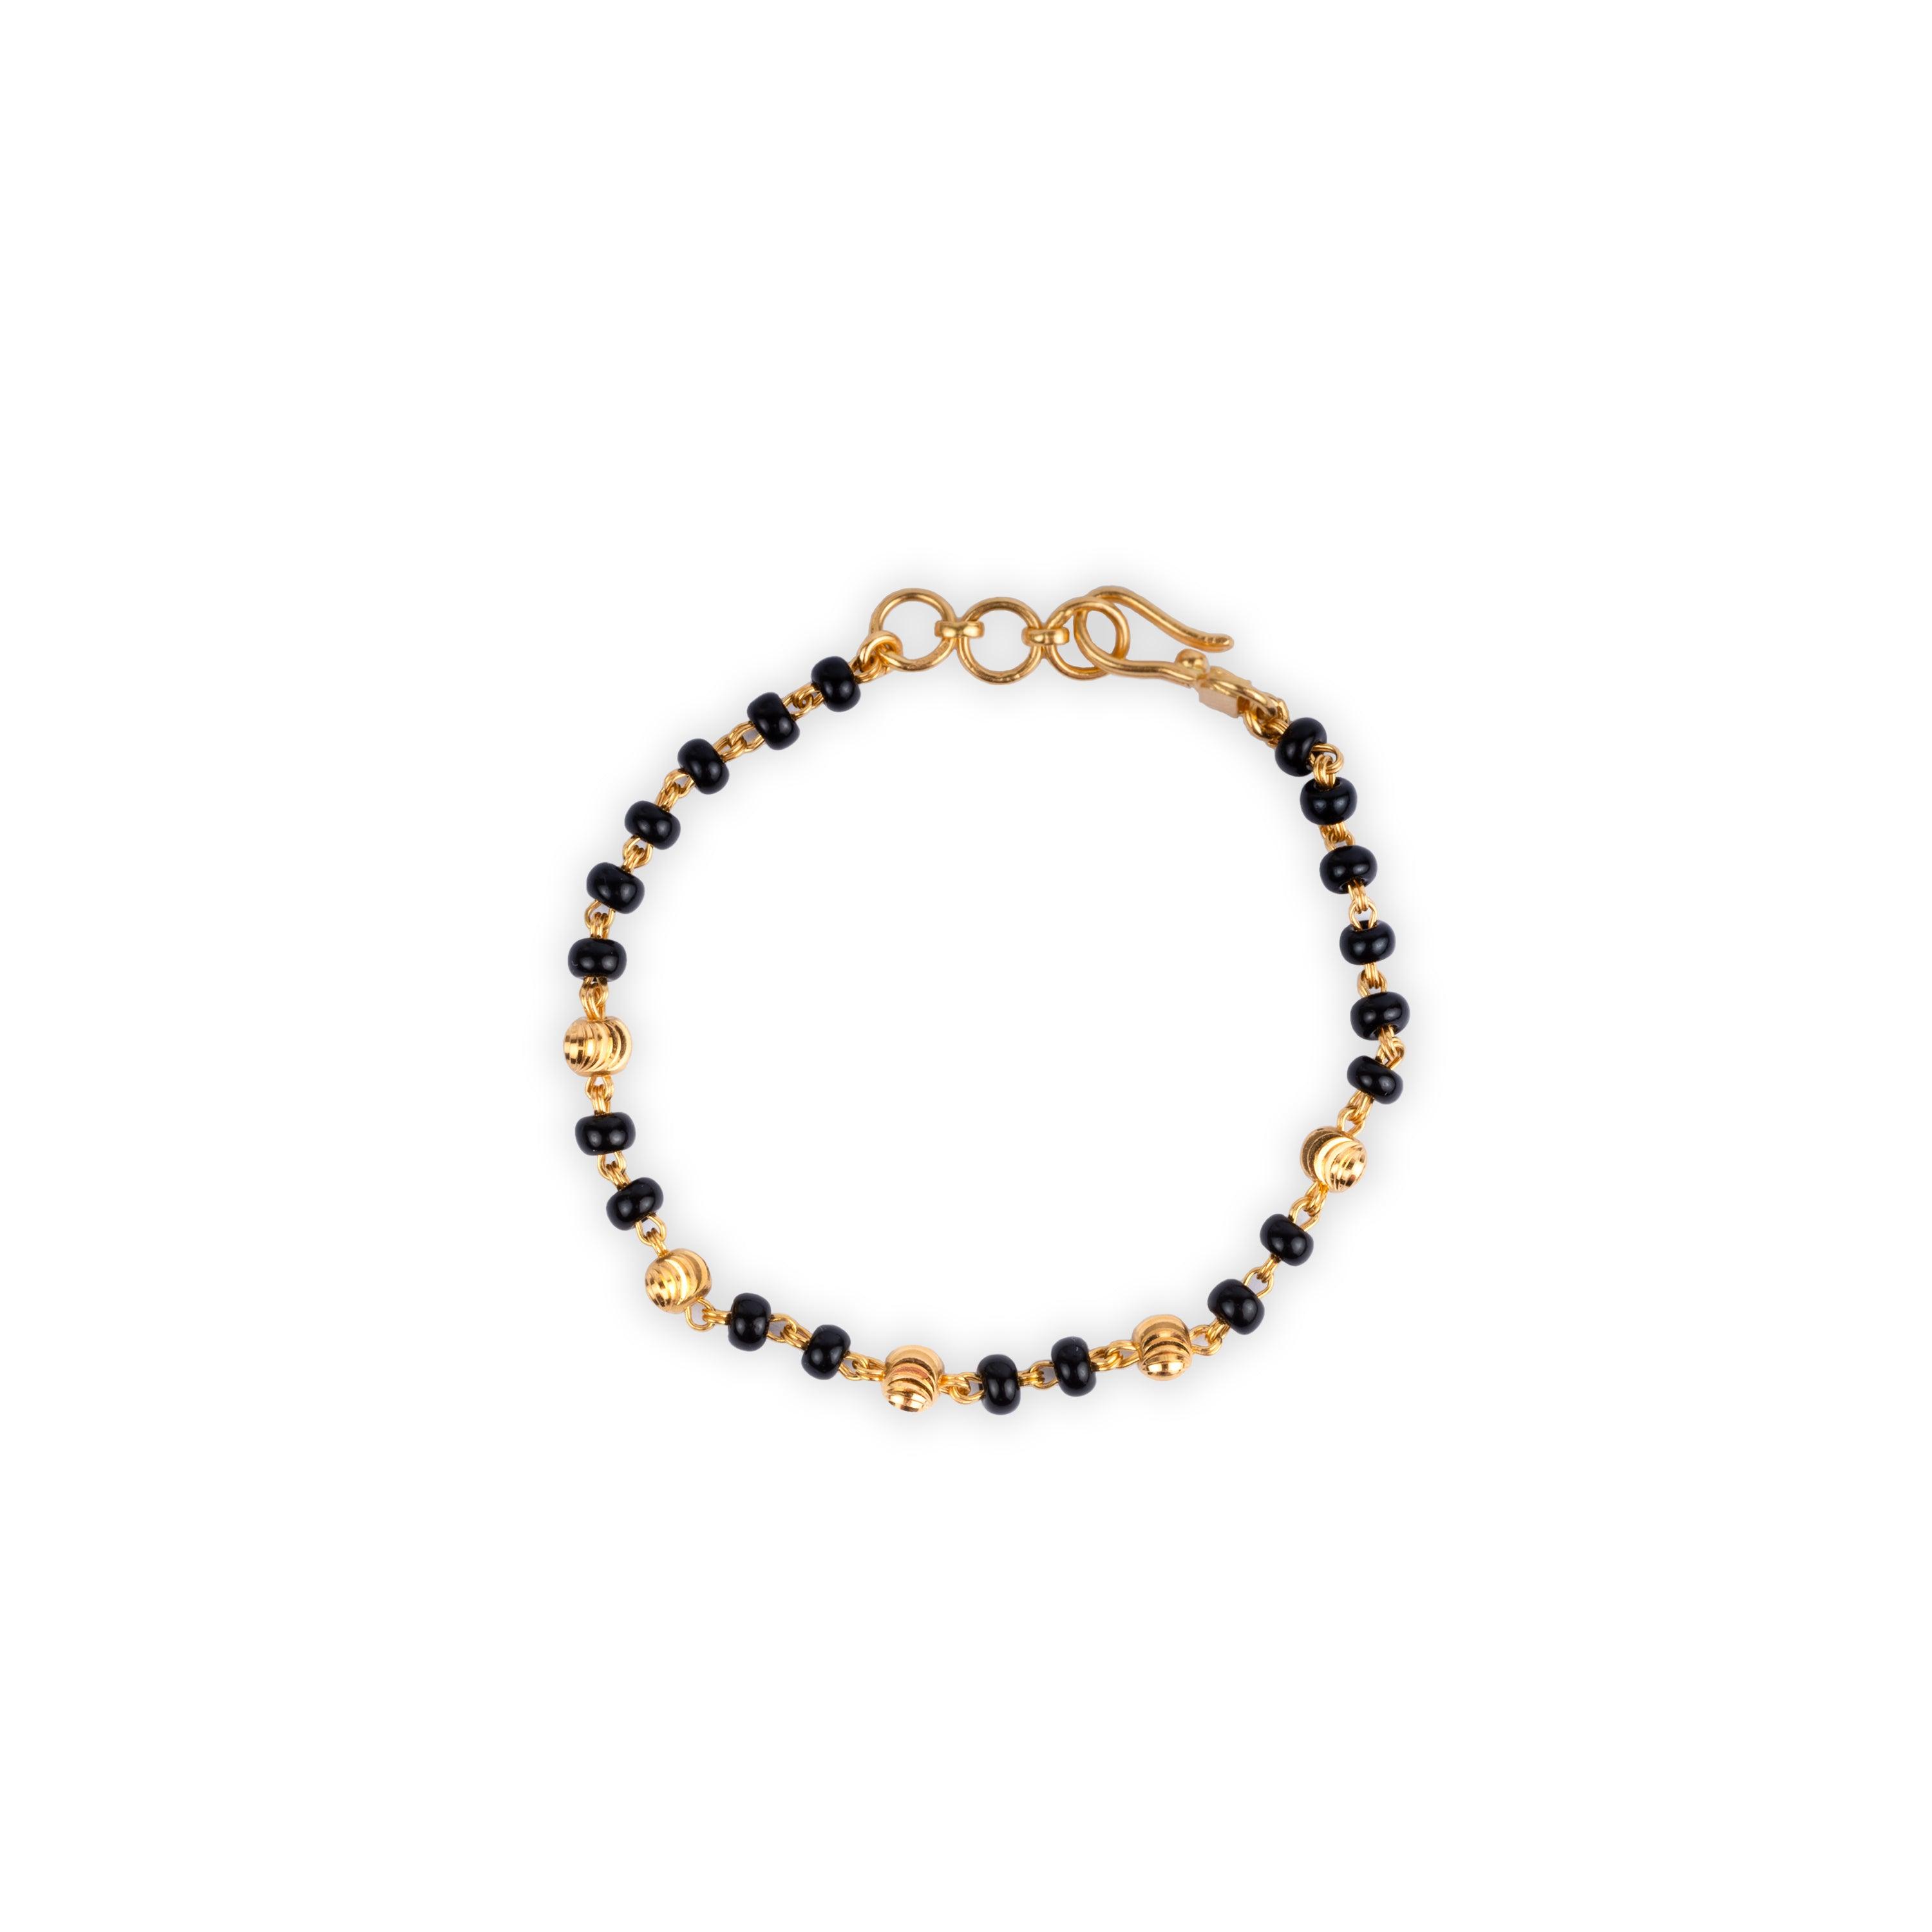 22ct Gold Black Bead Children's Bracelets with Hook Clasp CBR-8270 - Minar Jewellers